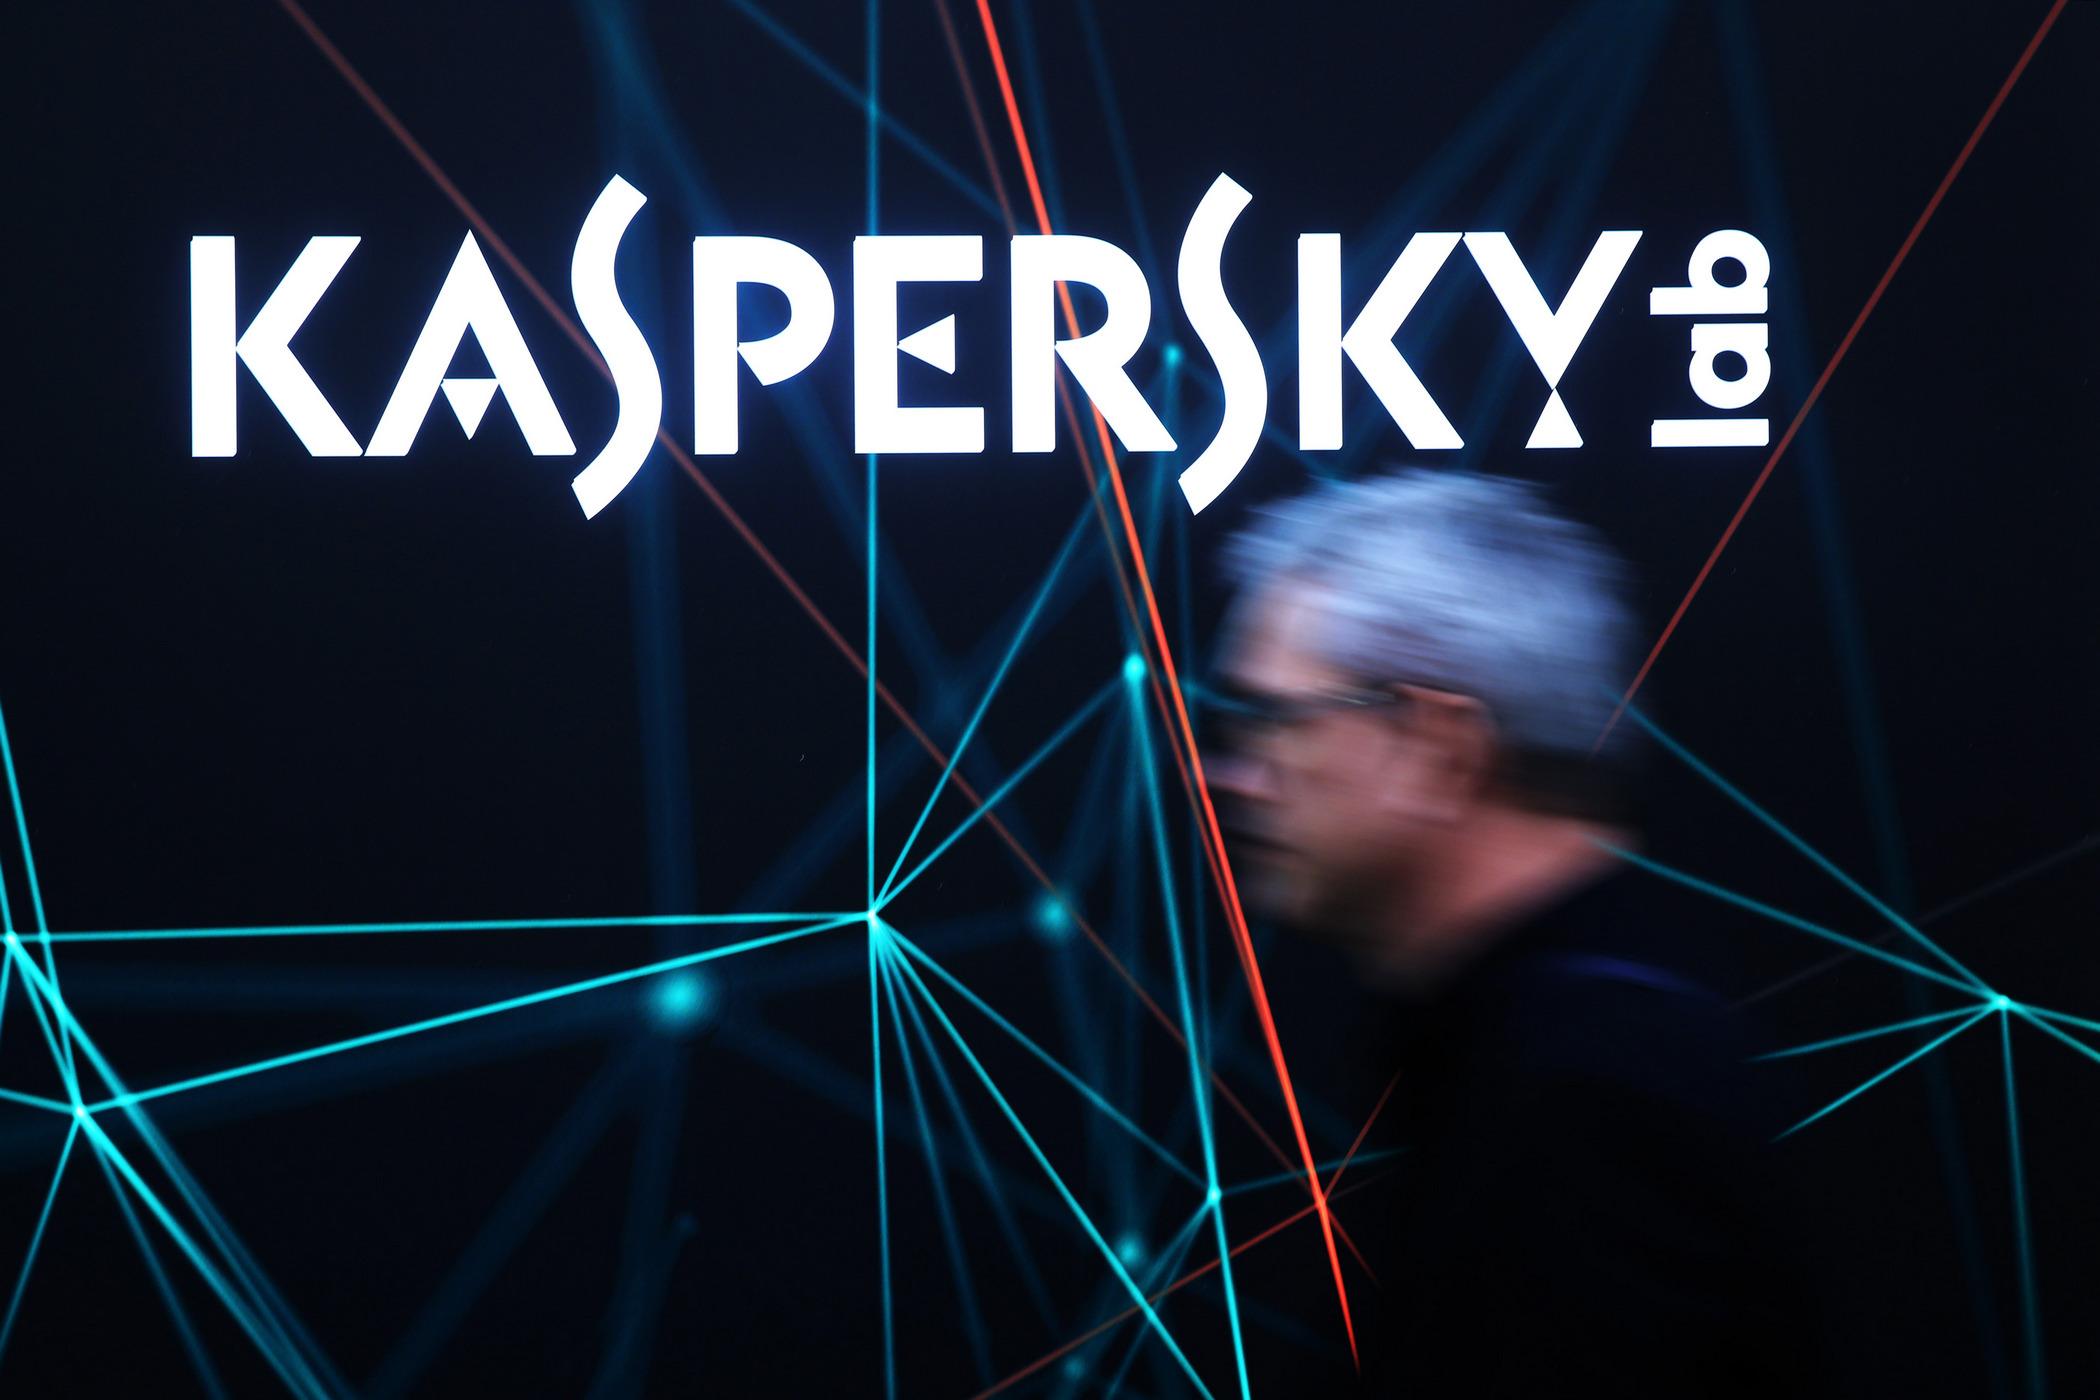 Kaspersky Lab Capture the Flag (CTF)